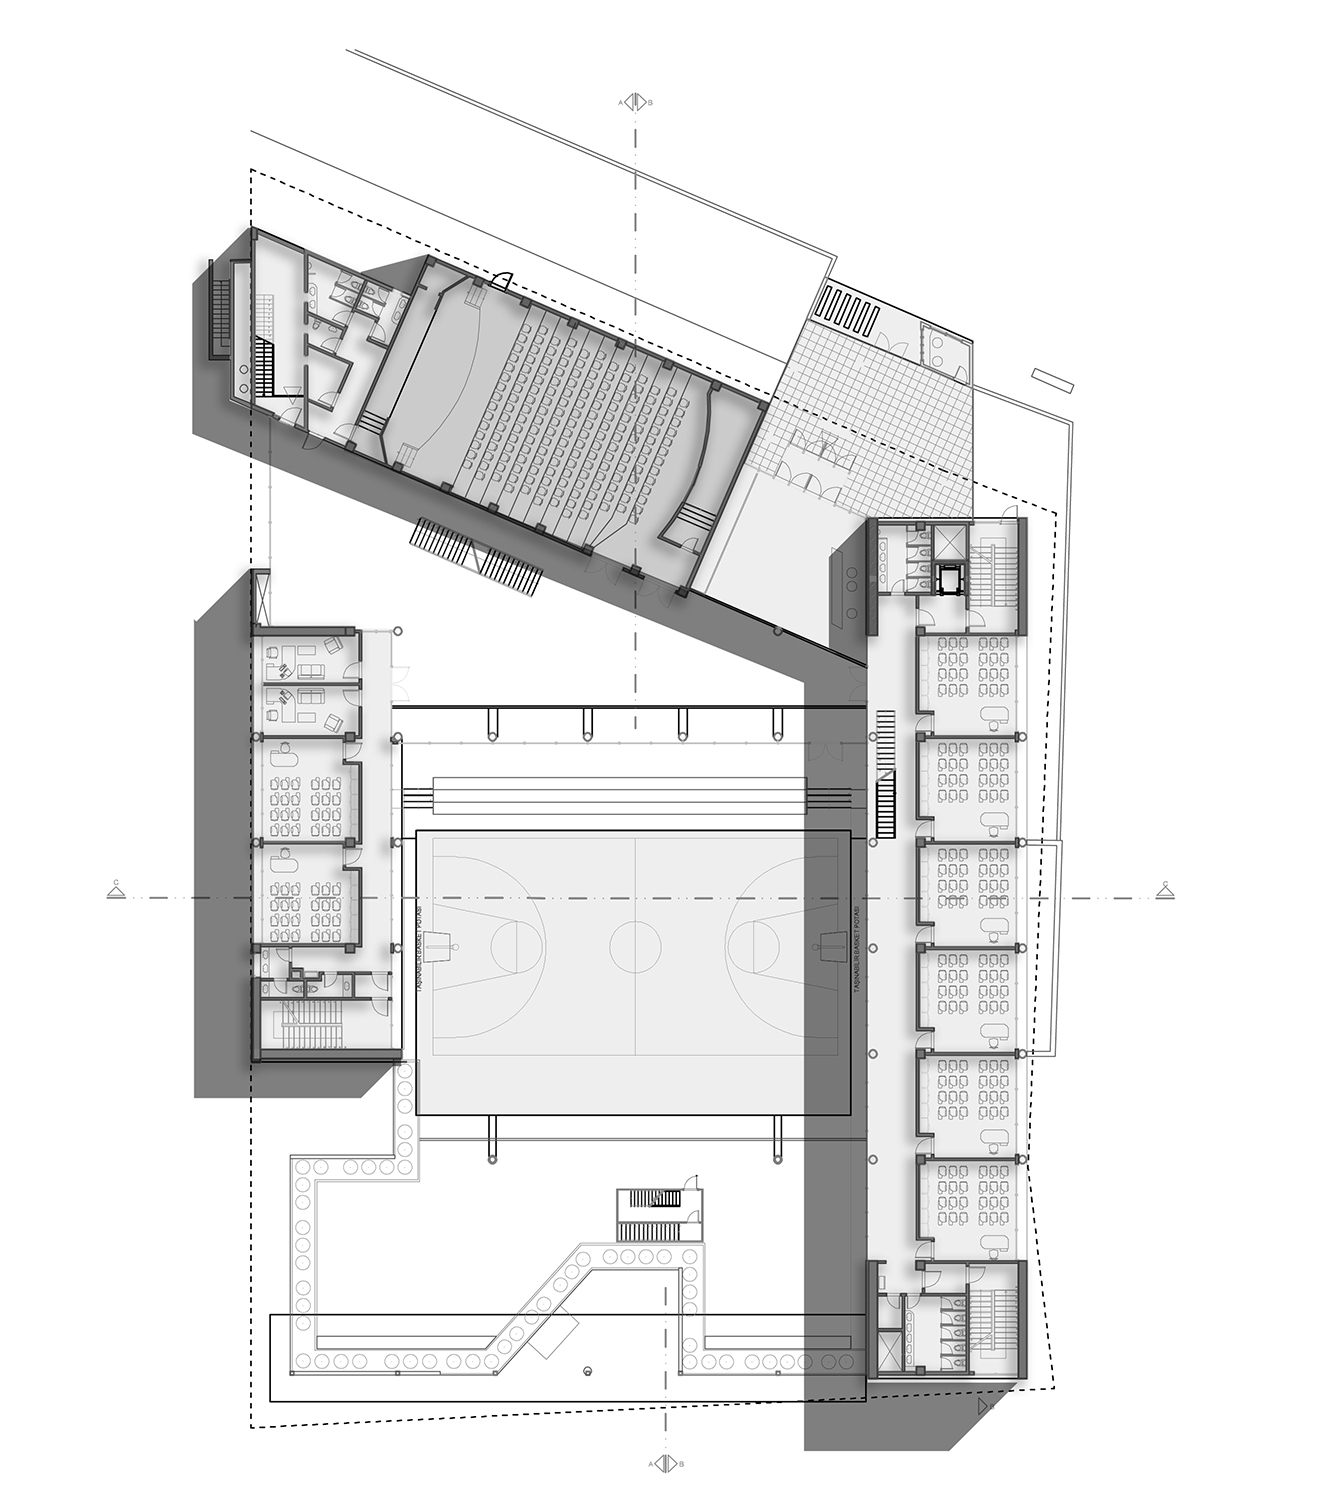 Main entry floor plan